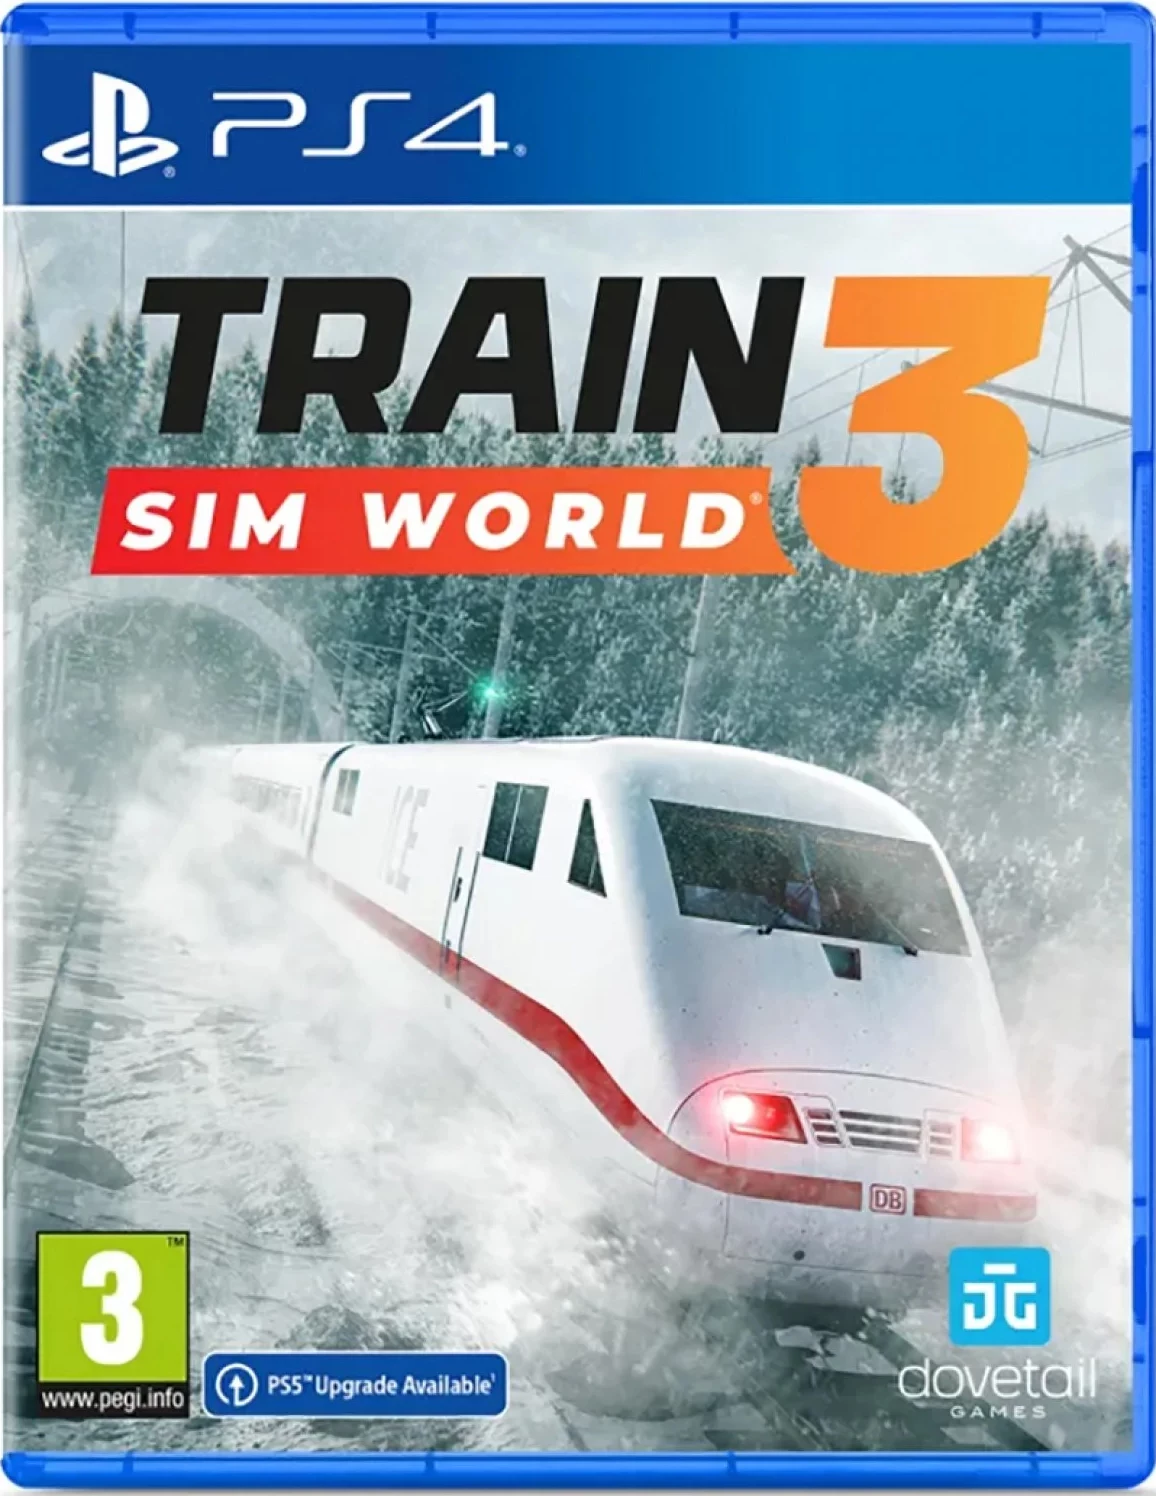 Train Sim World 3 (PS4), Dovetail Games